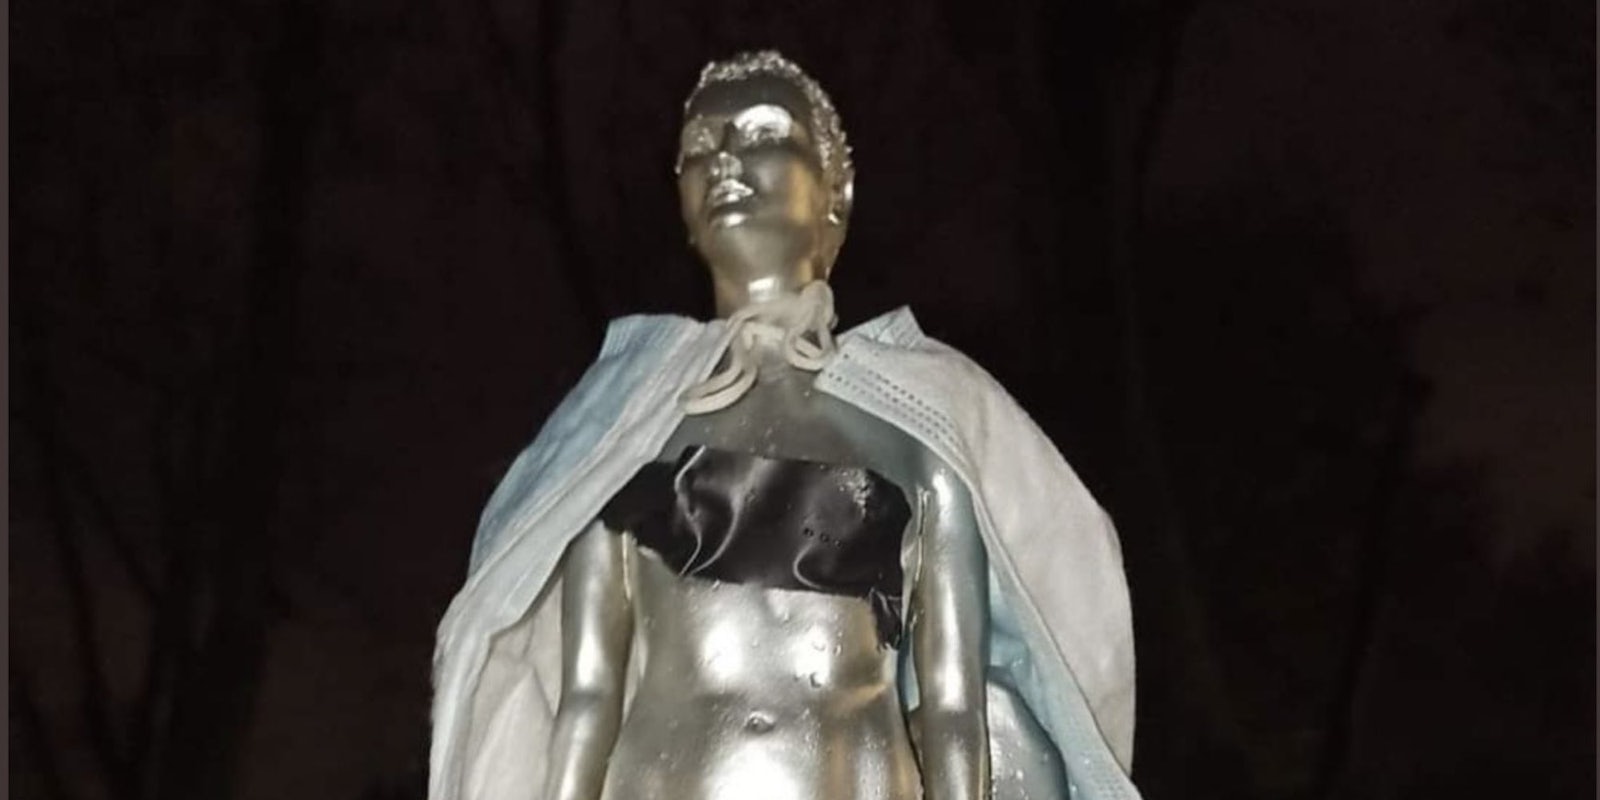 Mary Wollstonecraft nude statue backlash